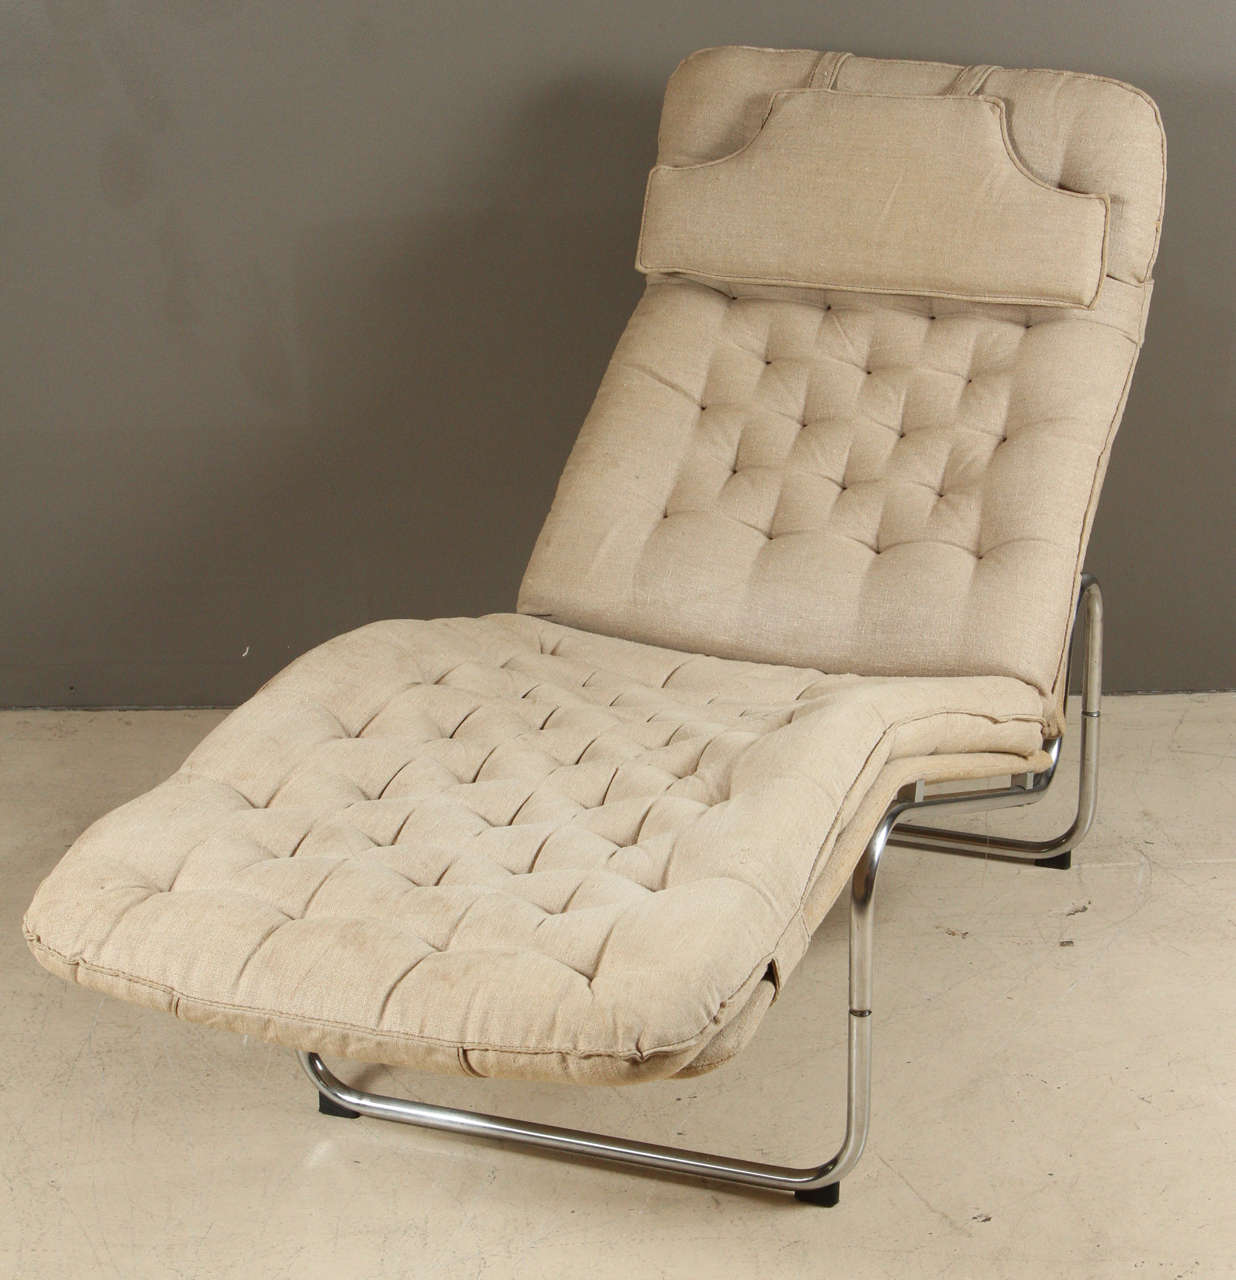 Tufted Scandinavian chaise longue in original Belgian linen.